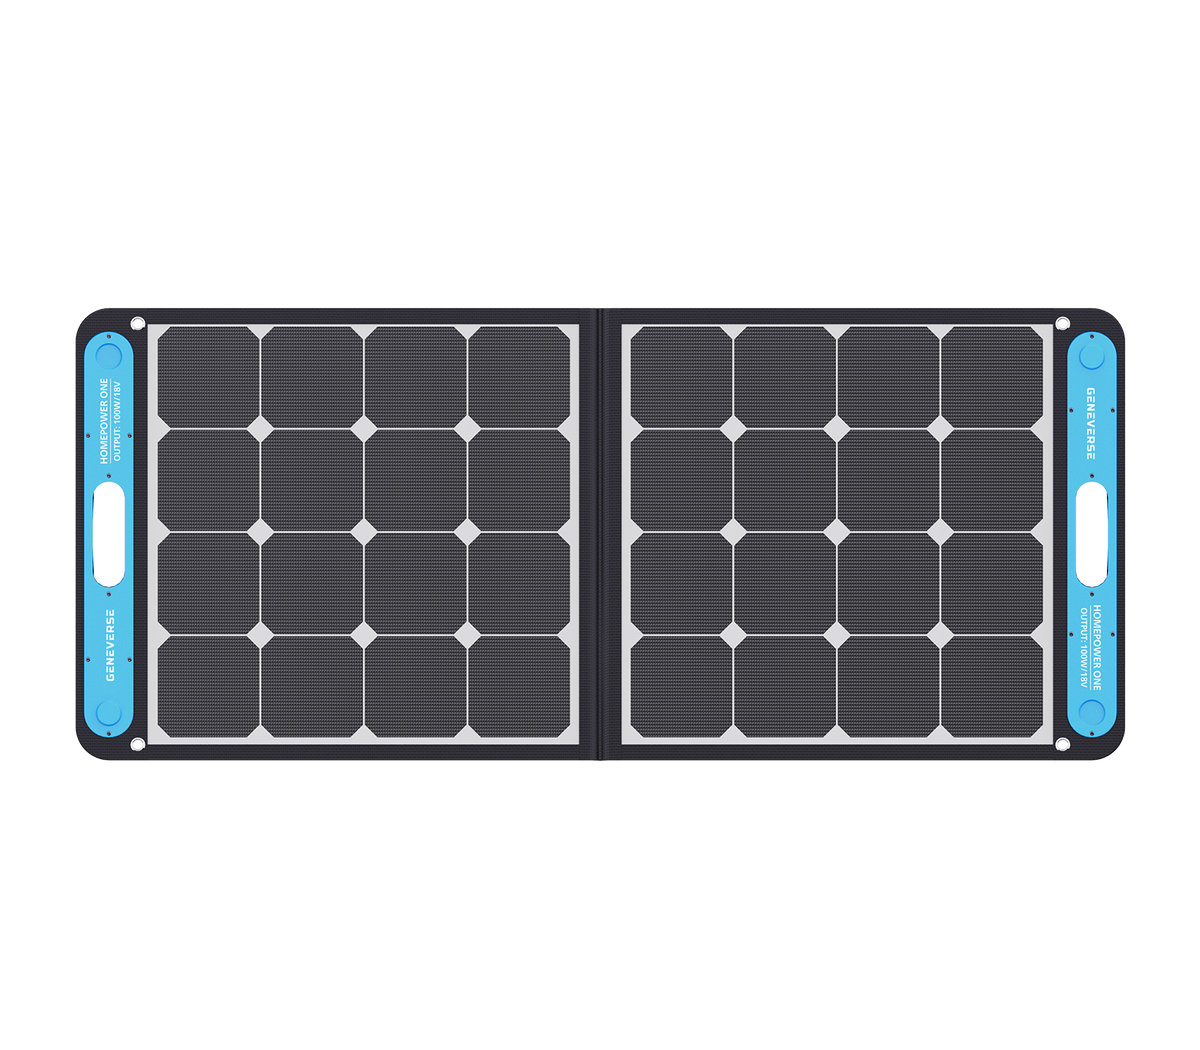 Geneverse SolarPower ONE Portable Solar Panels